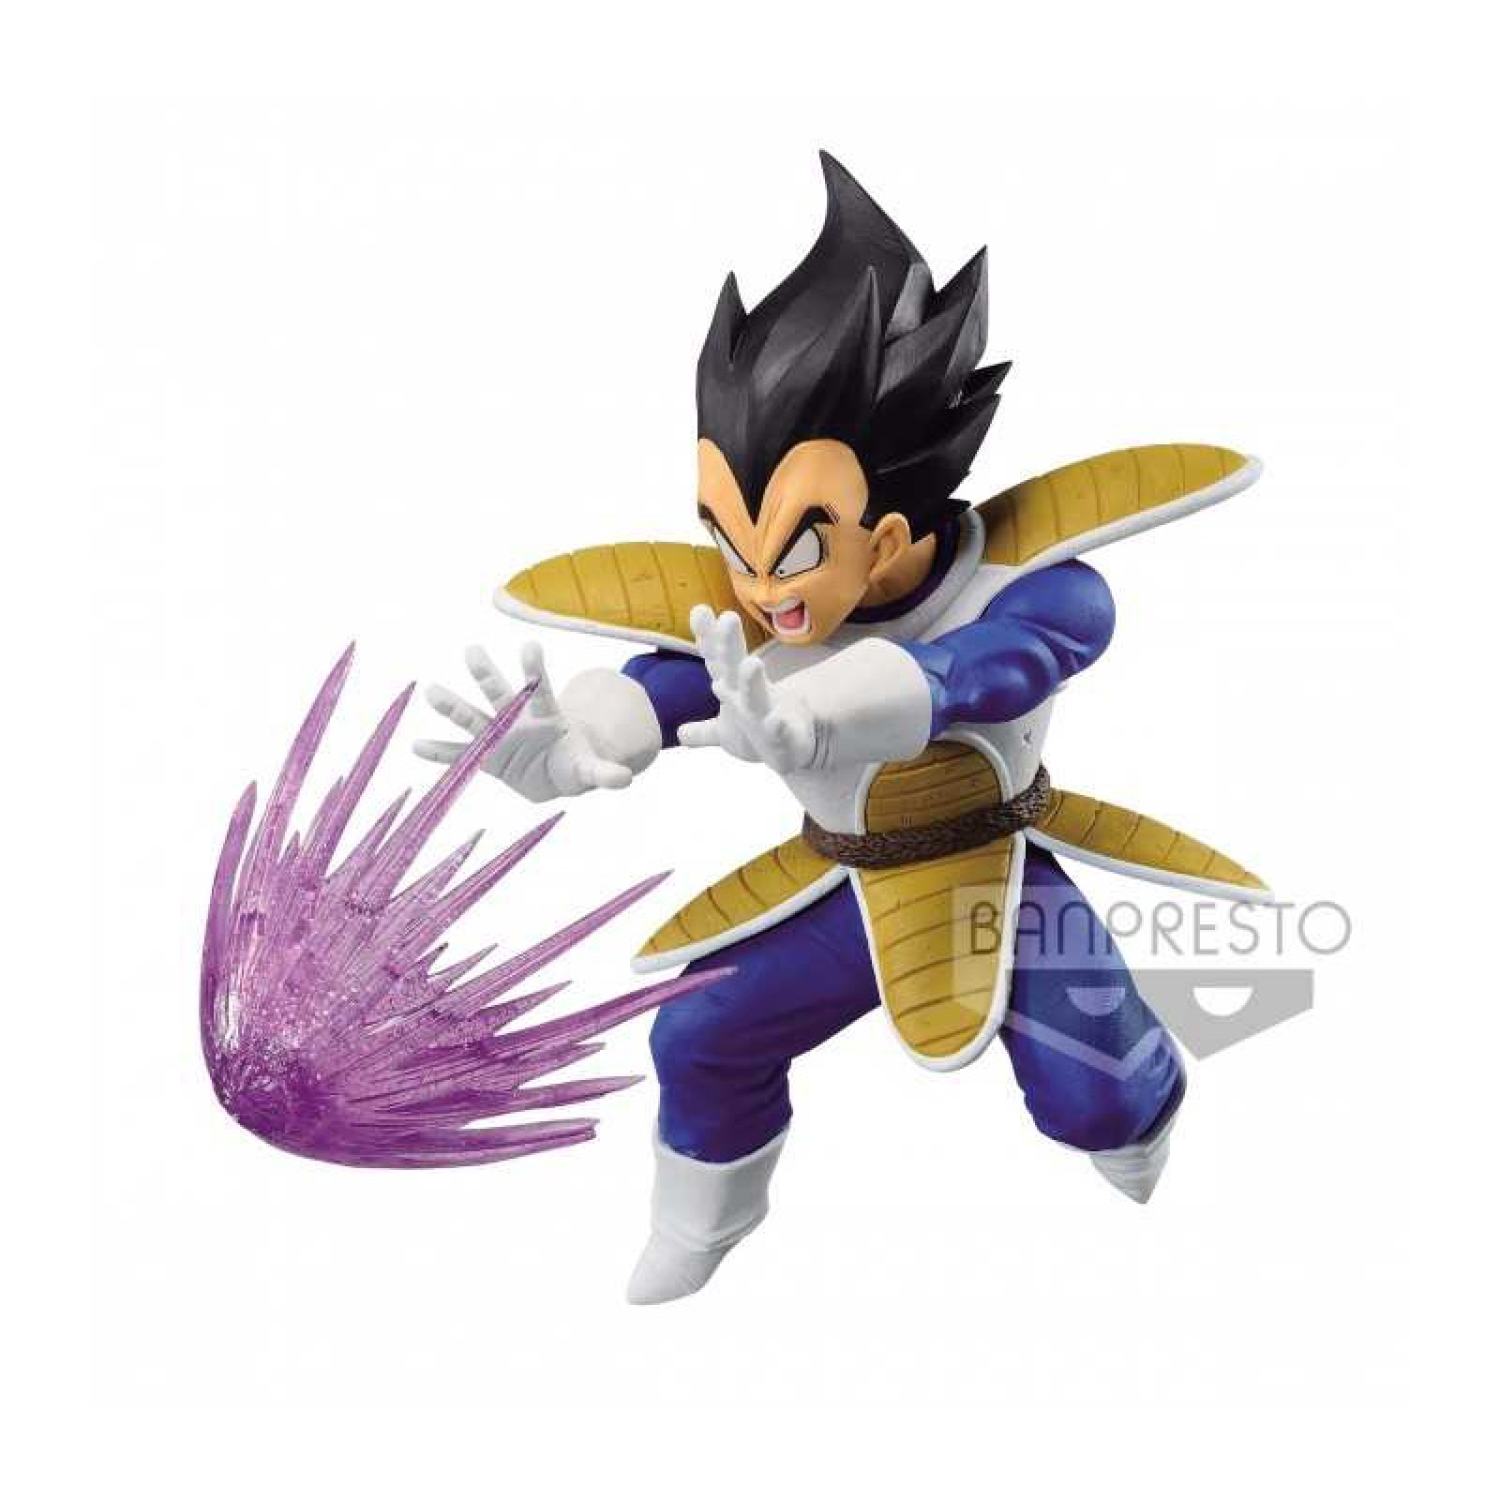 Mô hình Banpresto Figure Son Goku Super Saiyan 2 Dragon Ball Z MATCH M  Đồ  chơi trẻ em Kidslandvn